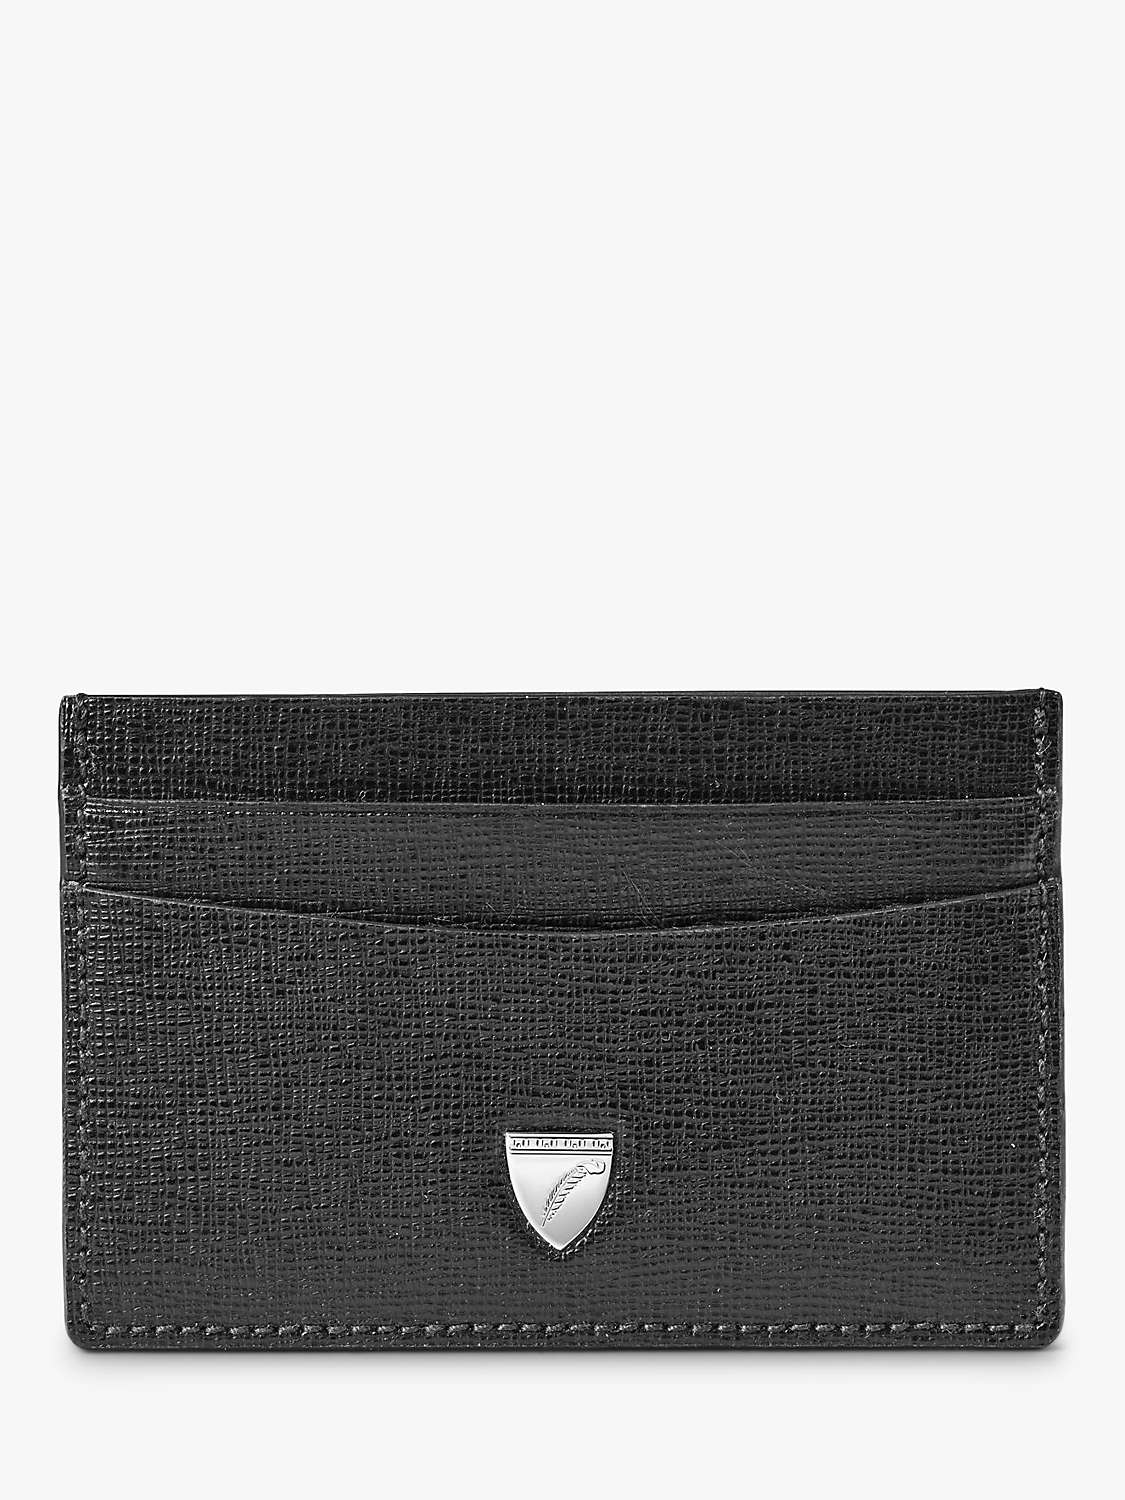 Buy Aspinal of London Saffiano Leather Slim Credit Card Holder Online at johnlewis.com